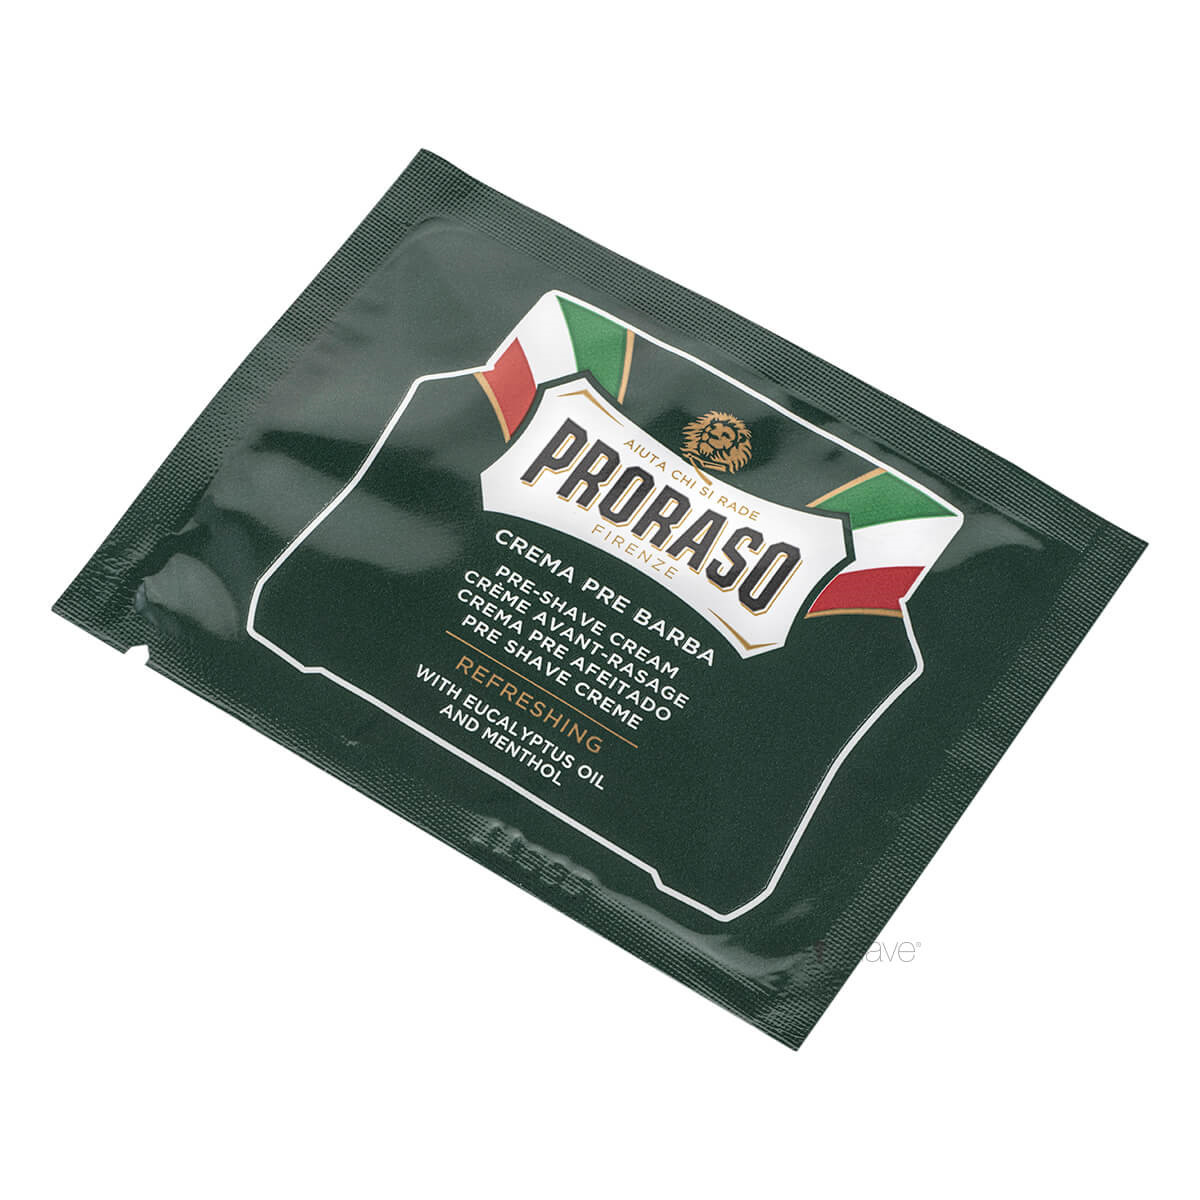 12: Proraso Preshave Cream - Refresh, Eucalyptus & Menthol, Sample, 4 ml.